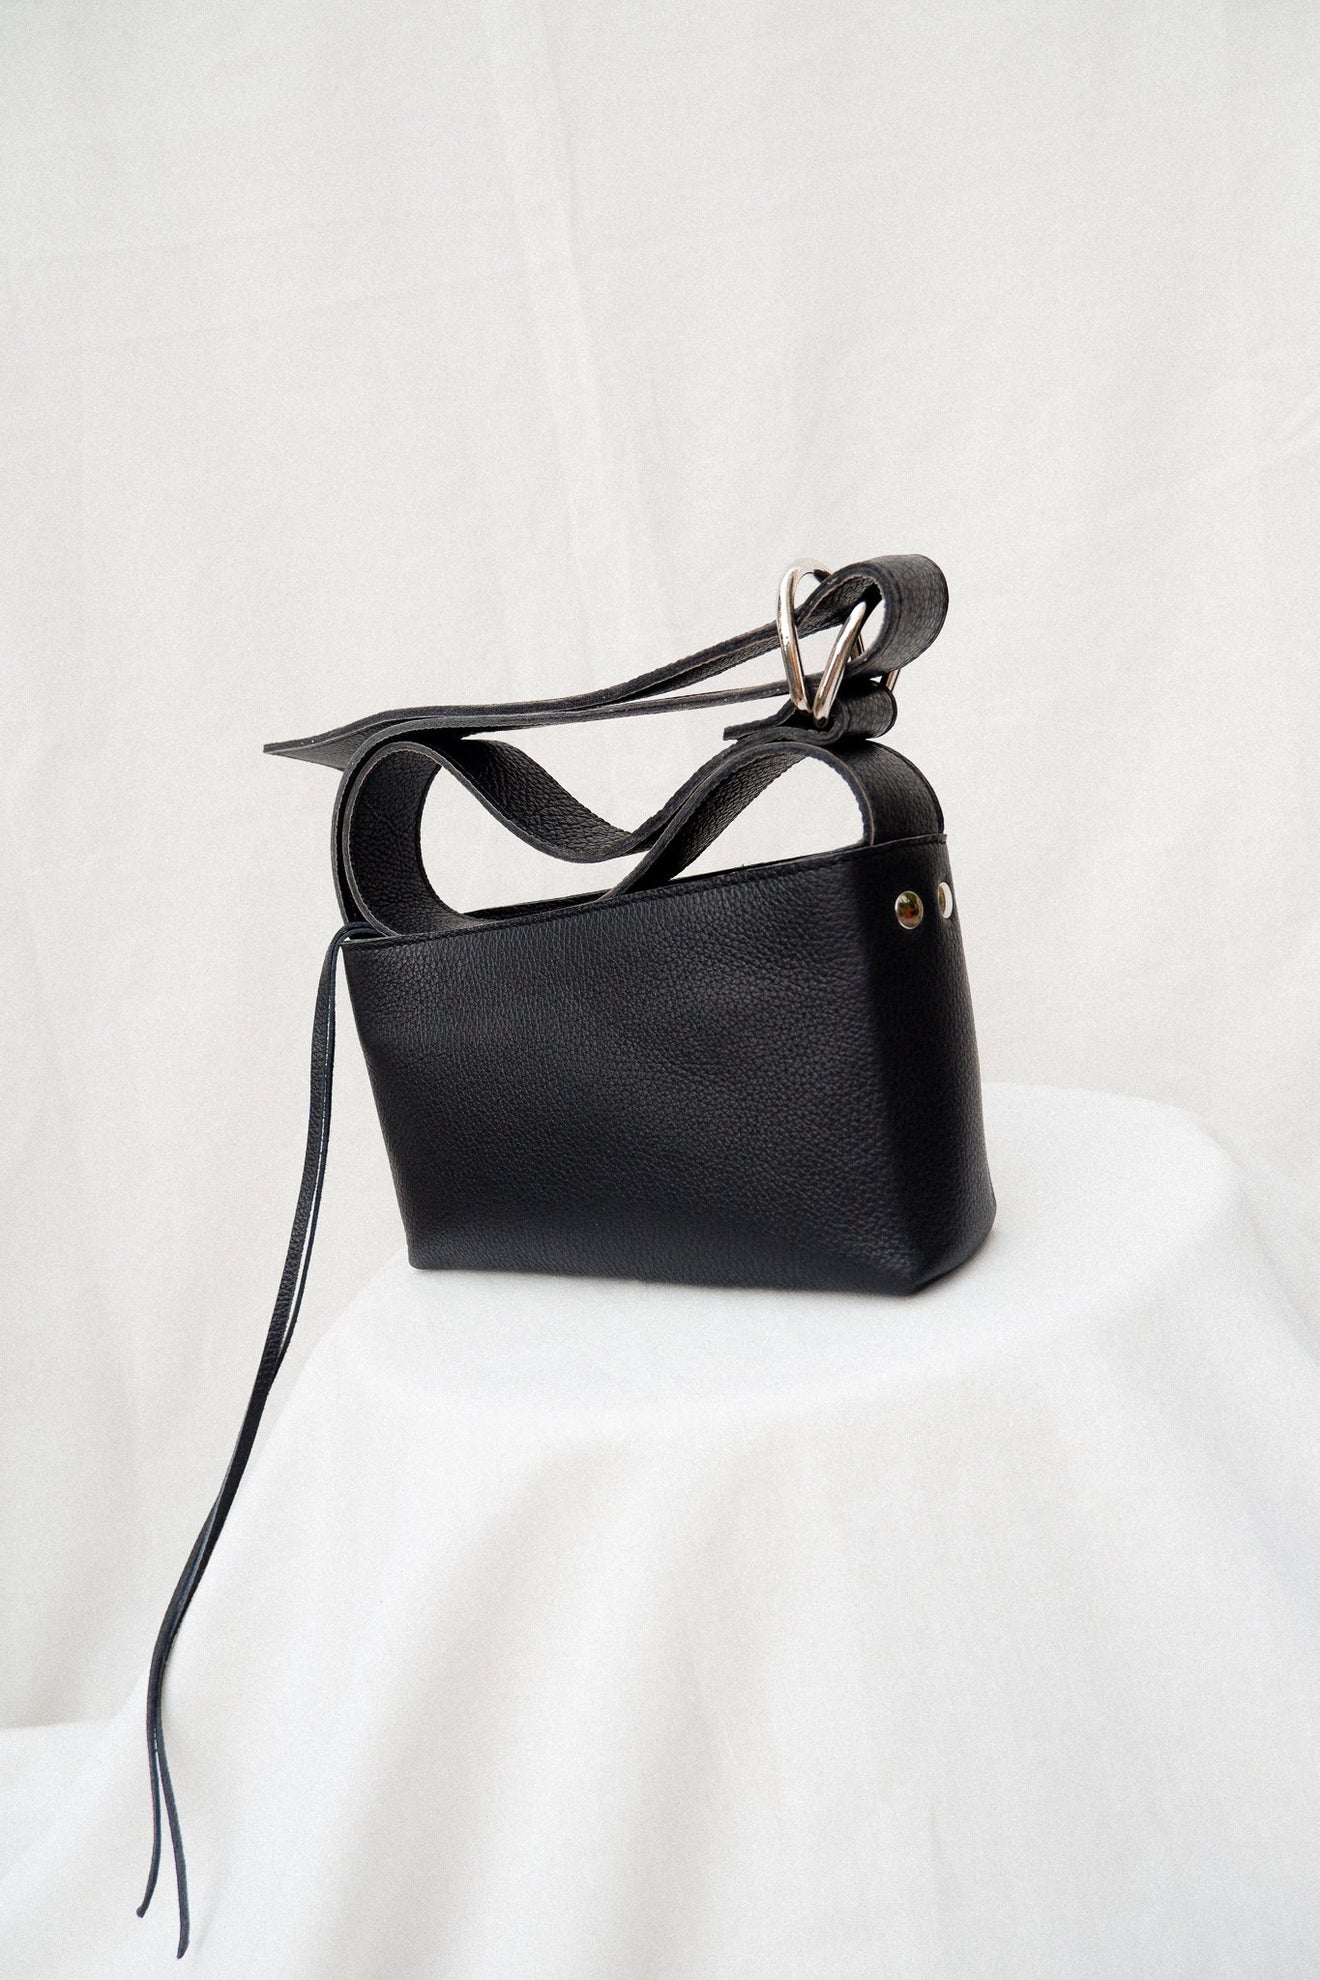 Nona Black Box Bag